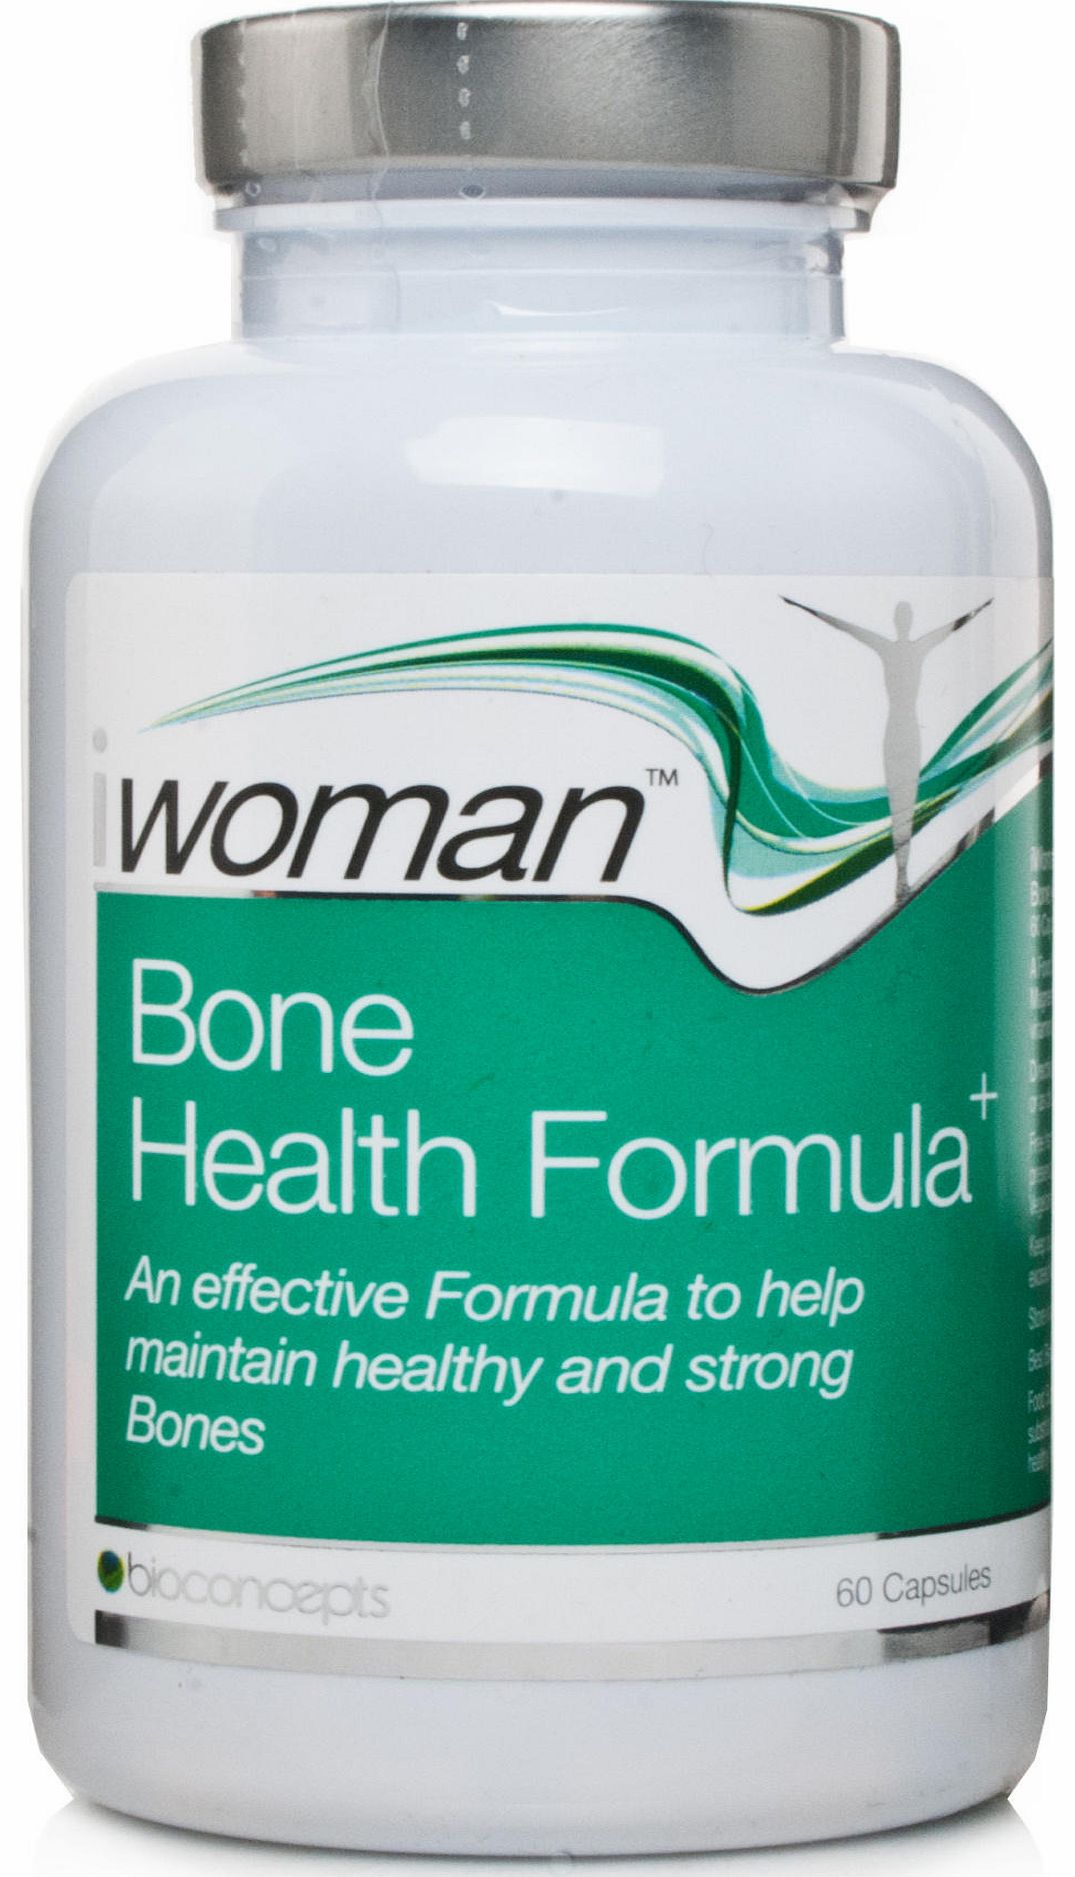 Bioconcepts iwoman Bone Health Formula  